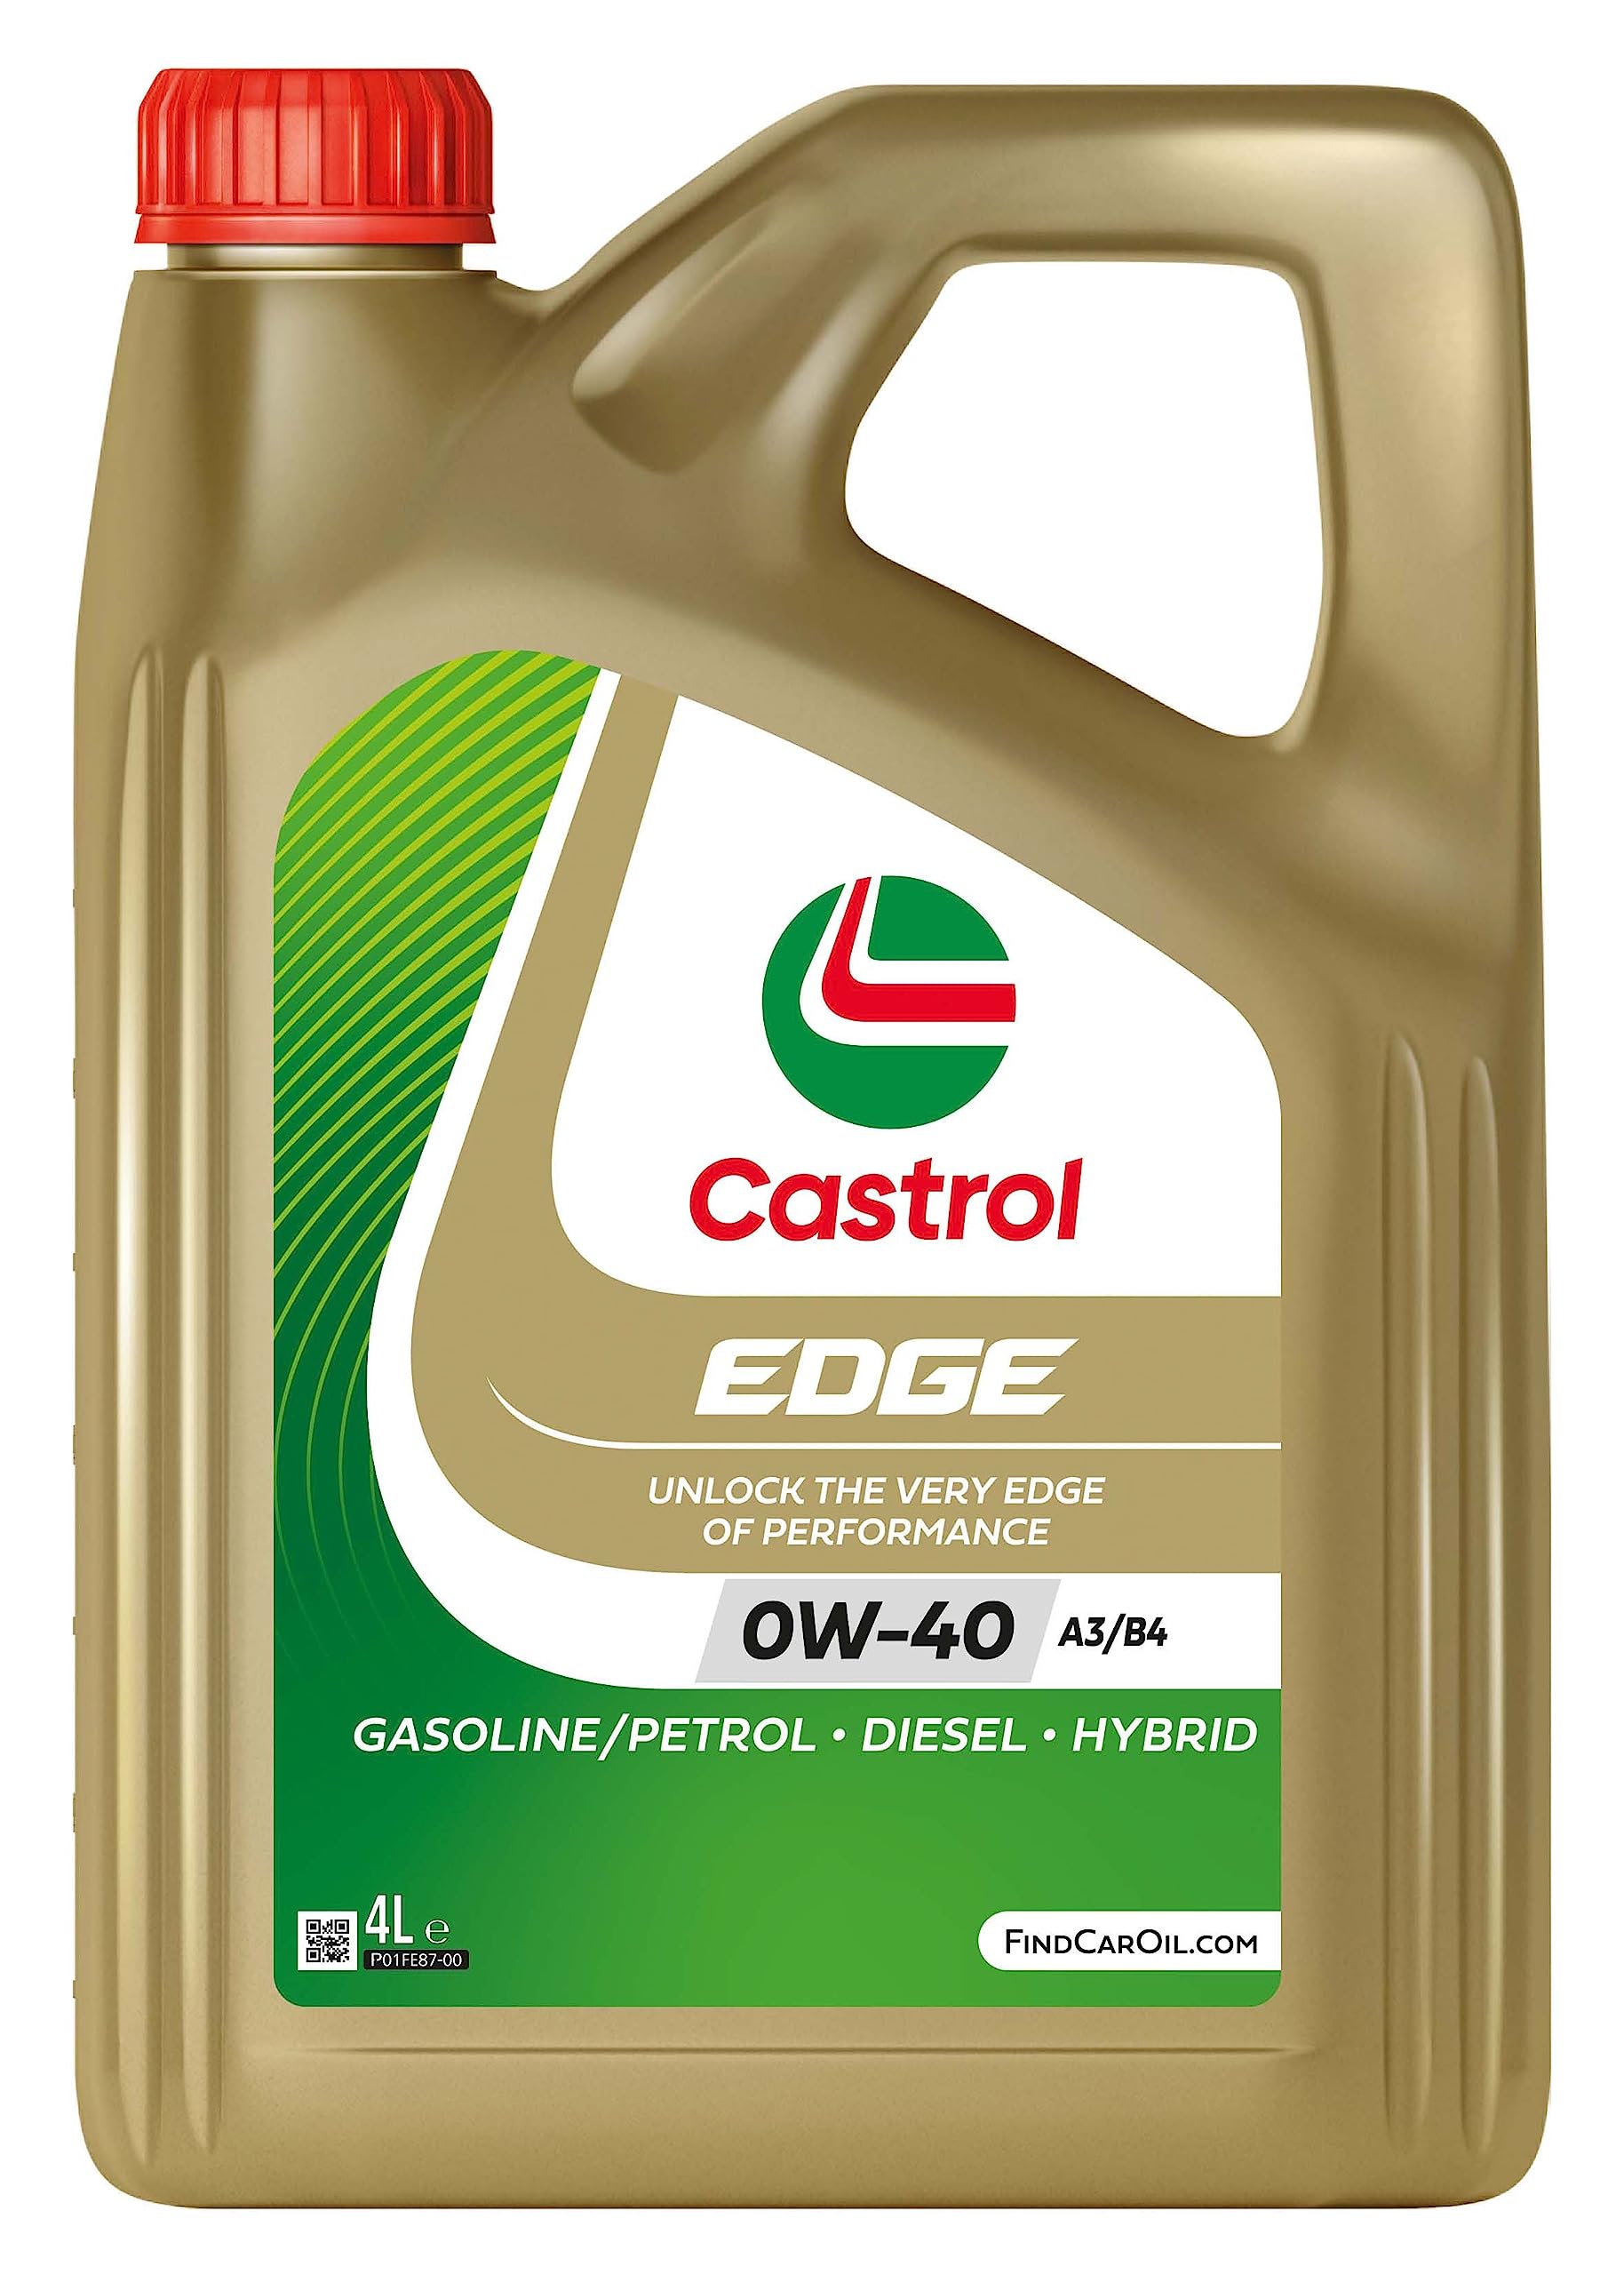 Castrol EDGE 0W-40 A3/B4 Motoröl, 4L von Castrol